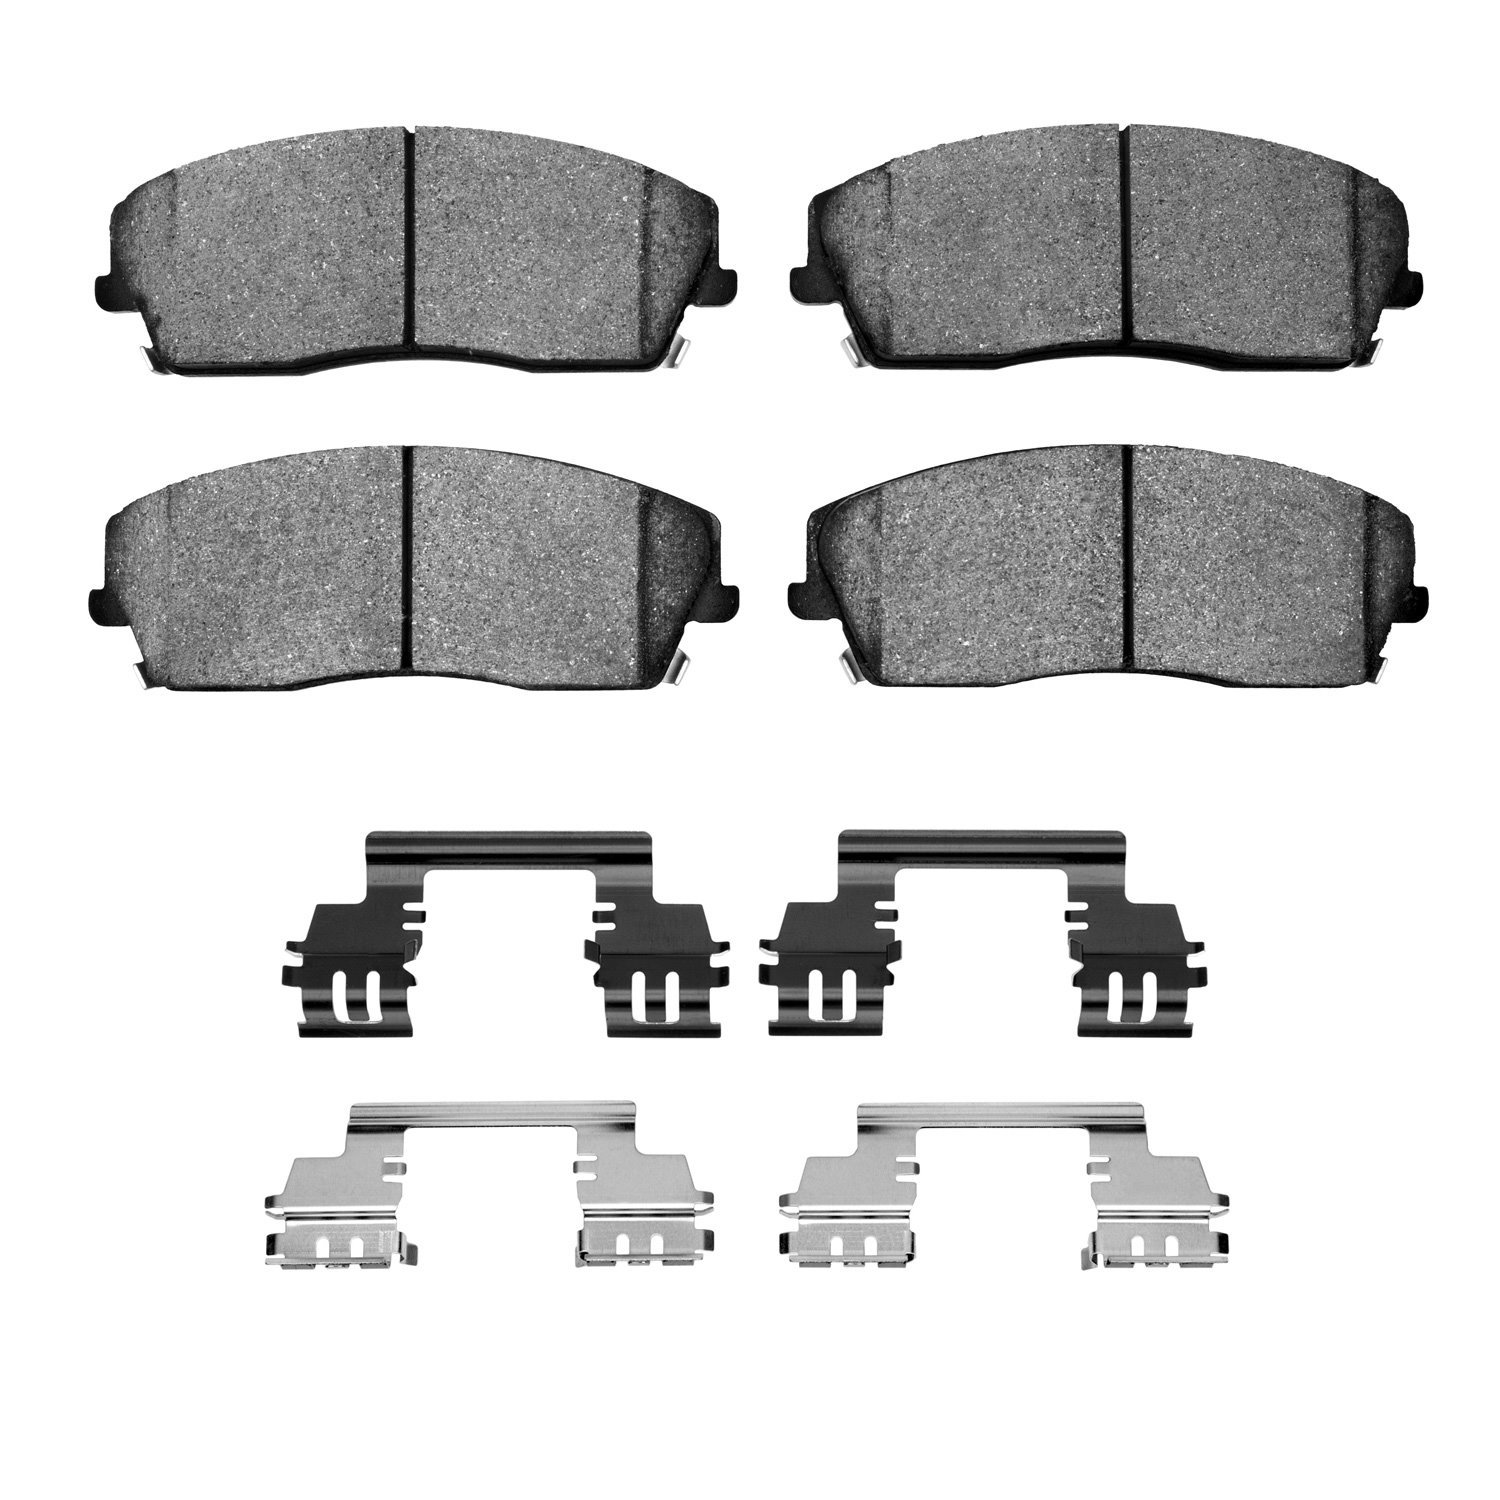 1551-1056-01 5000 Advanced Ceramic Brake Pads & Hardware Kit, Fits Select Mopar, Position: Front